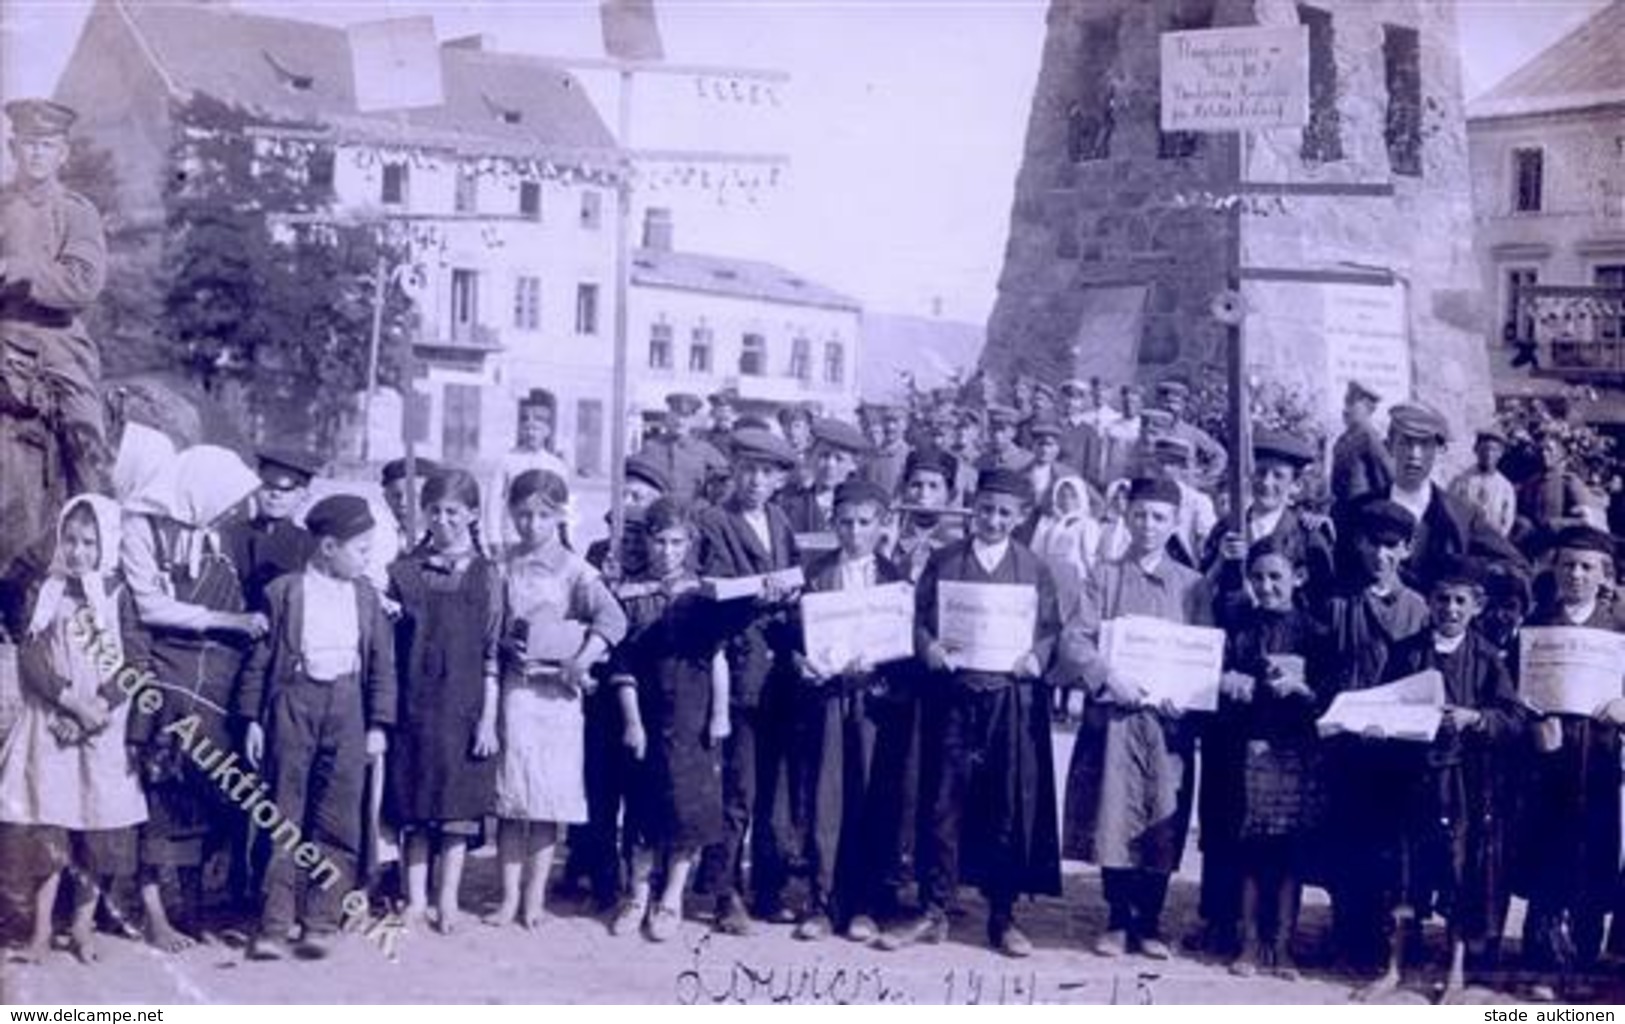 Judaika - Foto-Ak LOWICZ 1915 Mit Jüdische Zeitungsverkäufer I Judaisme - Giudaismo